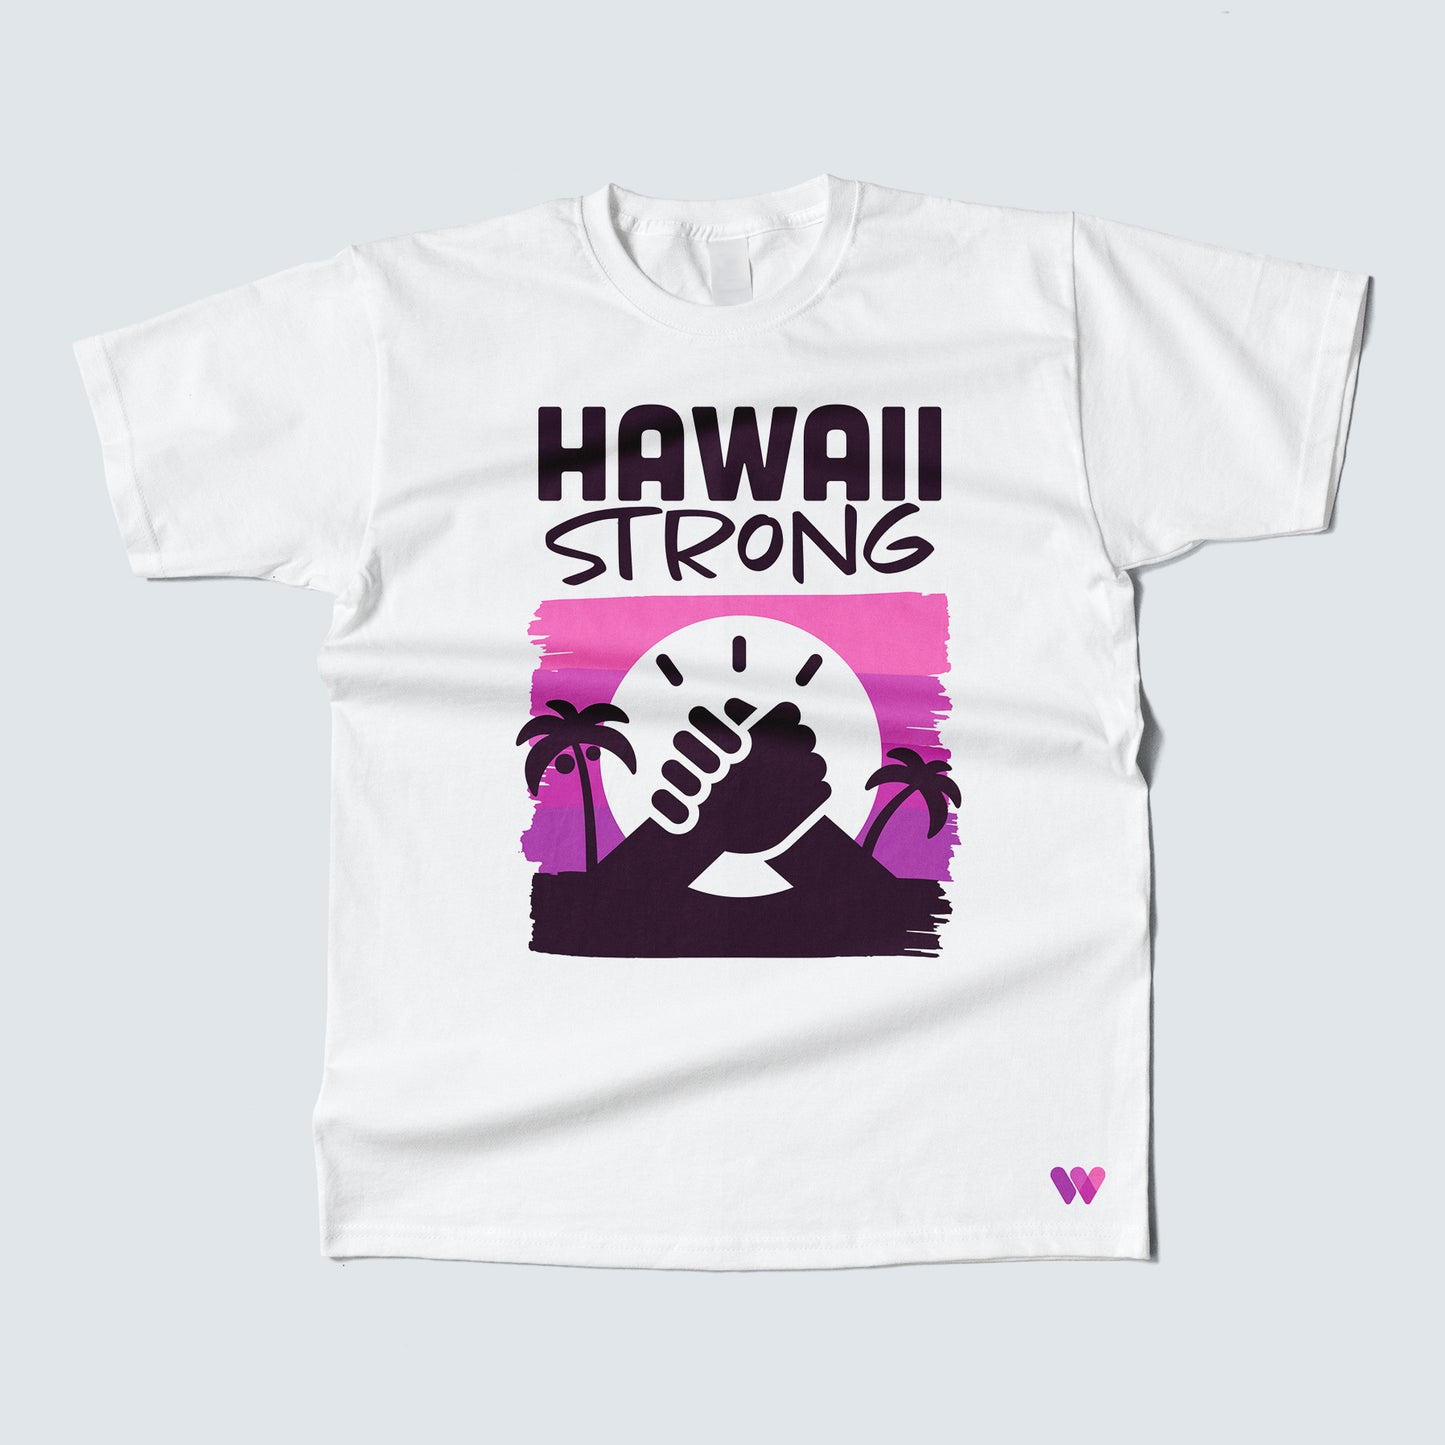 Hawaii Strong - White t-shirt